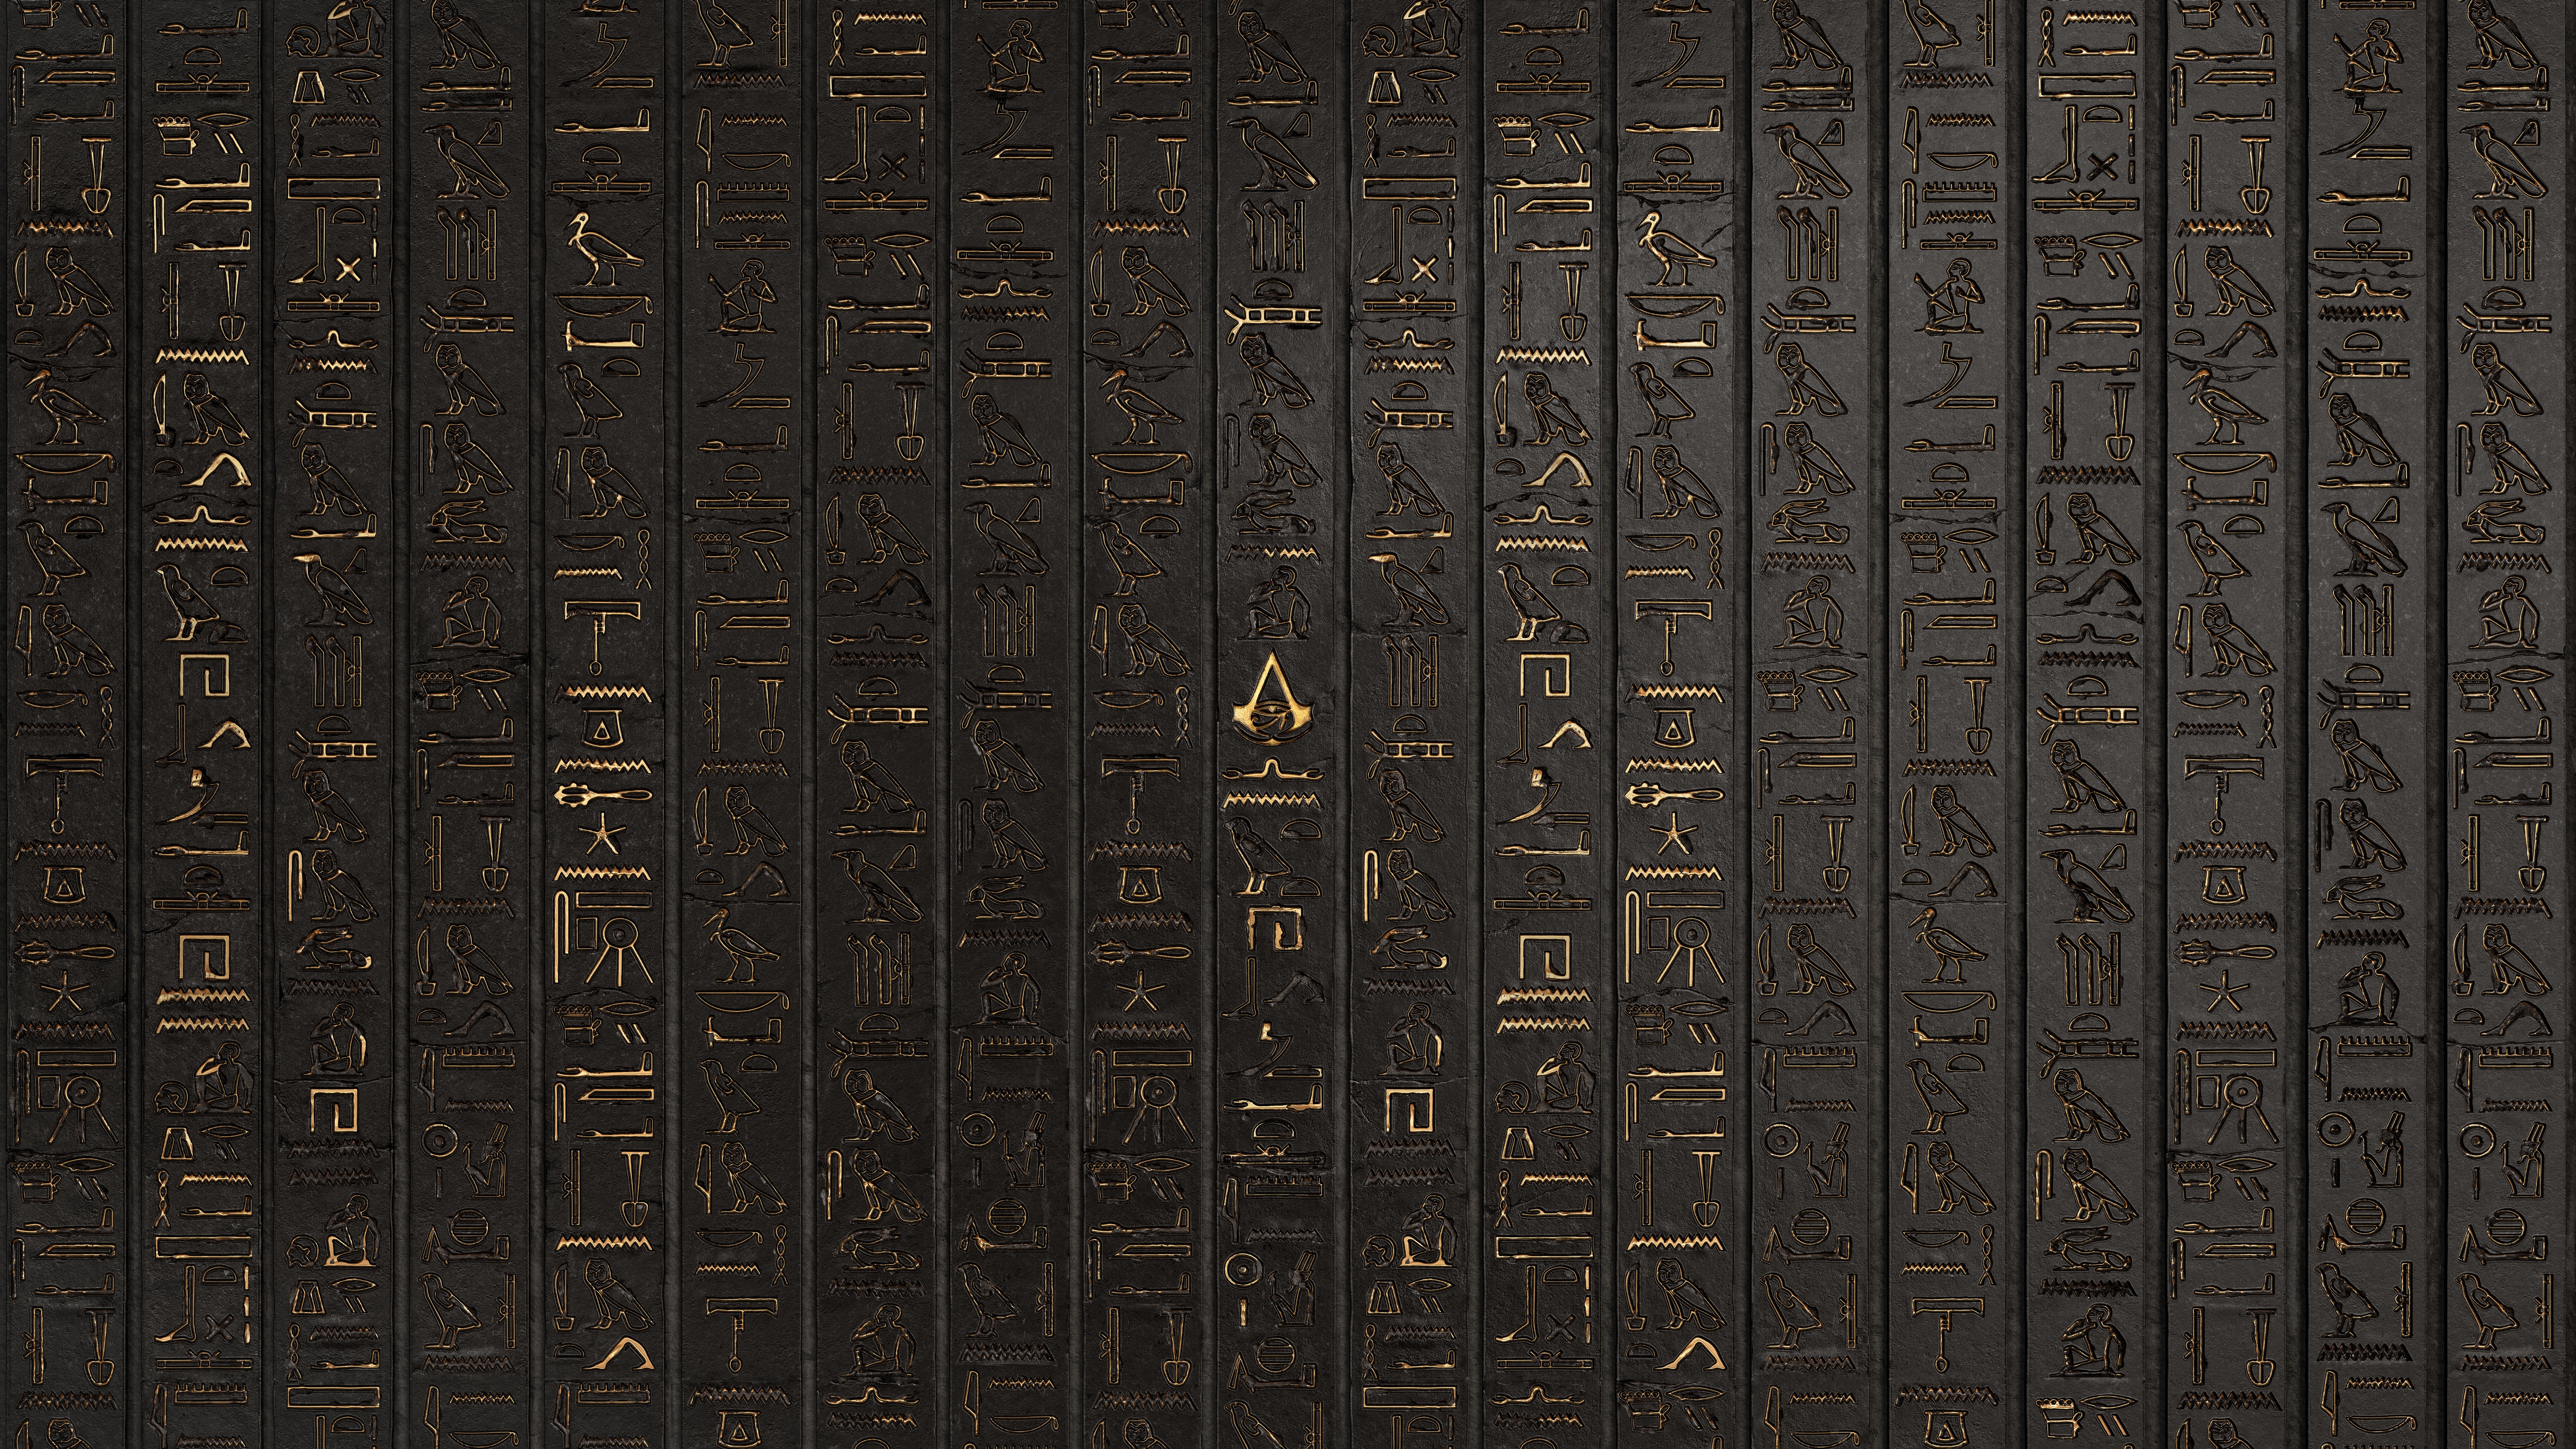 digital art, Artwork, Video games, Assassins Creed, Wall, Hieroglyphs, Engraving, Symbols, Assassins Creed: Origins Wallpaper